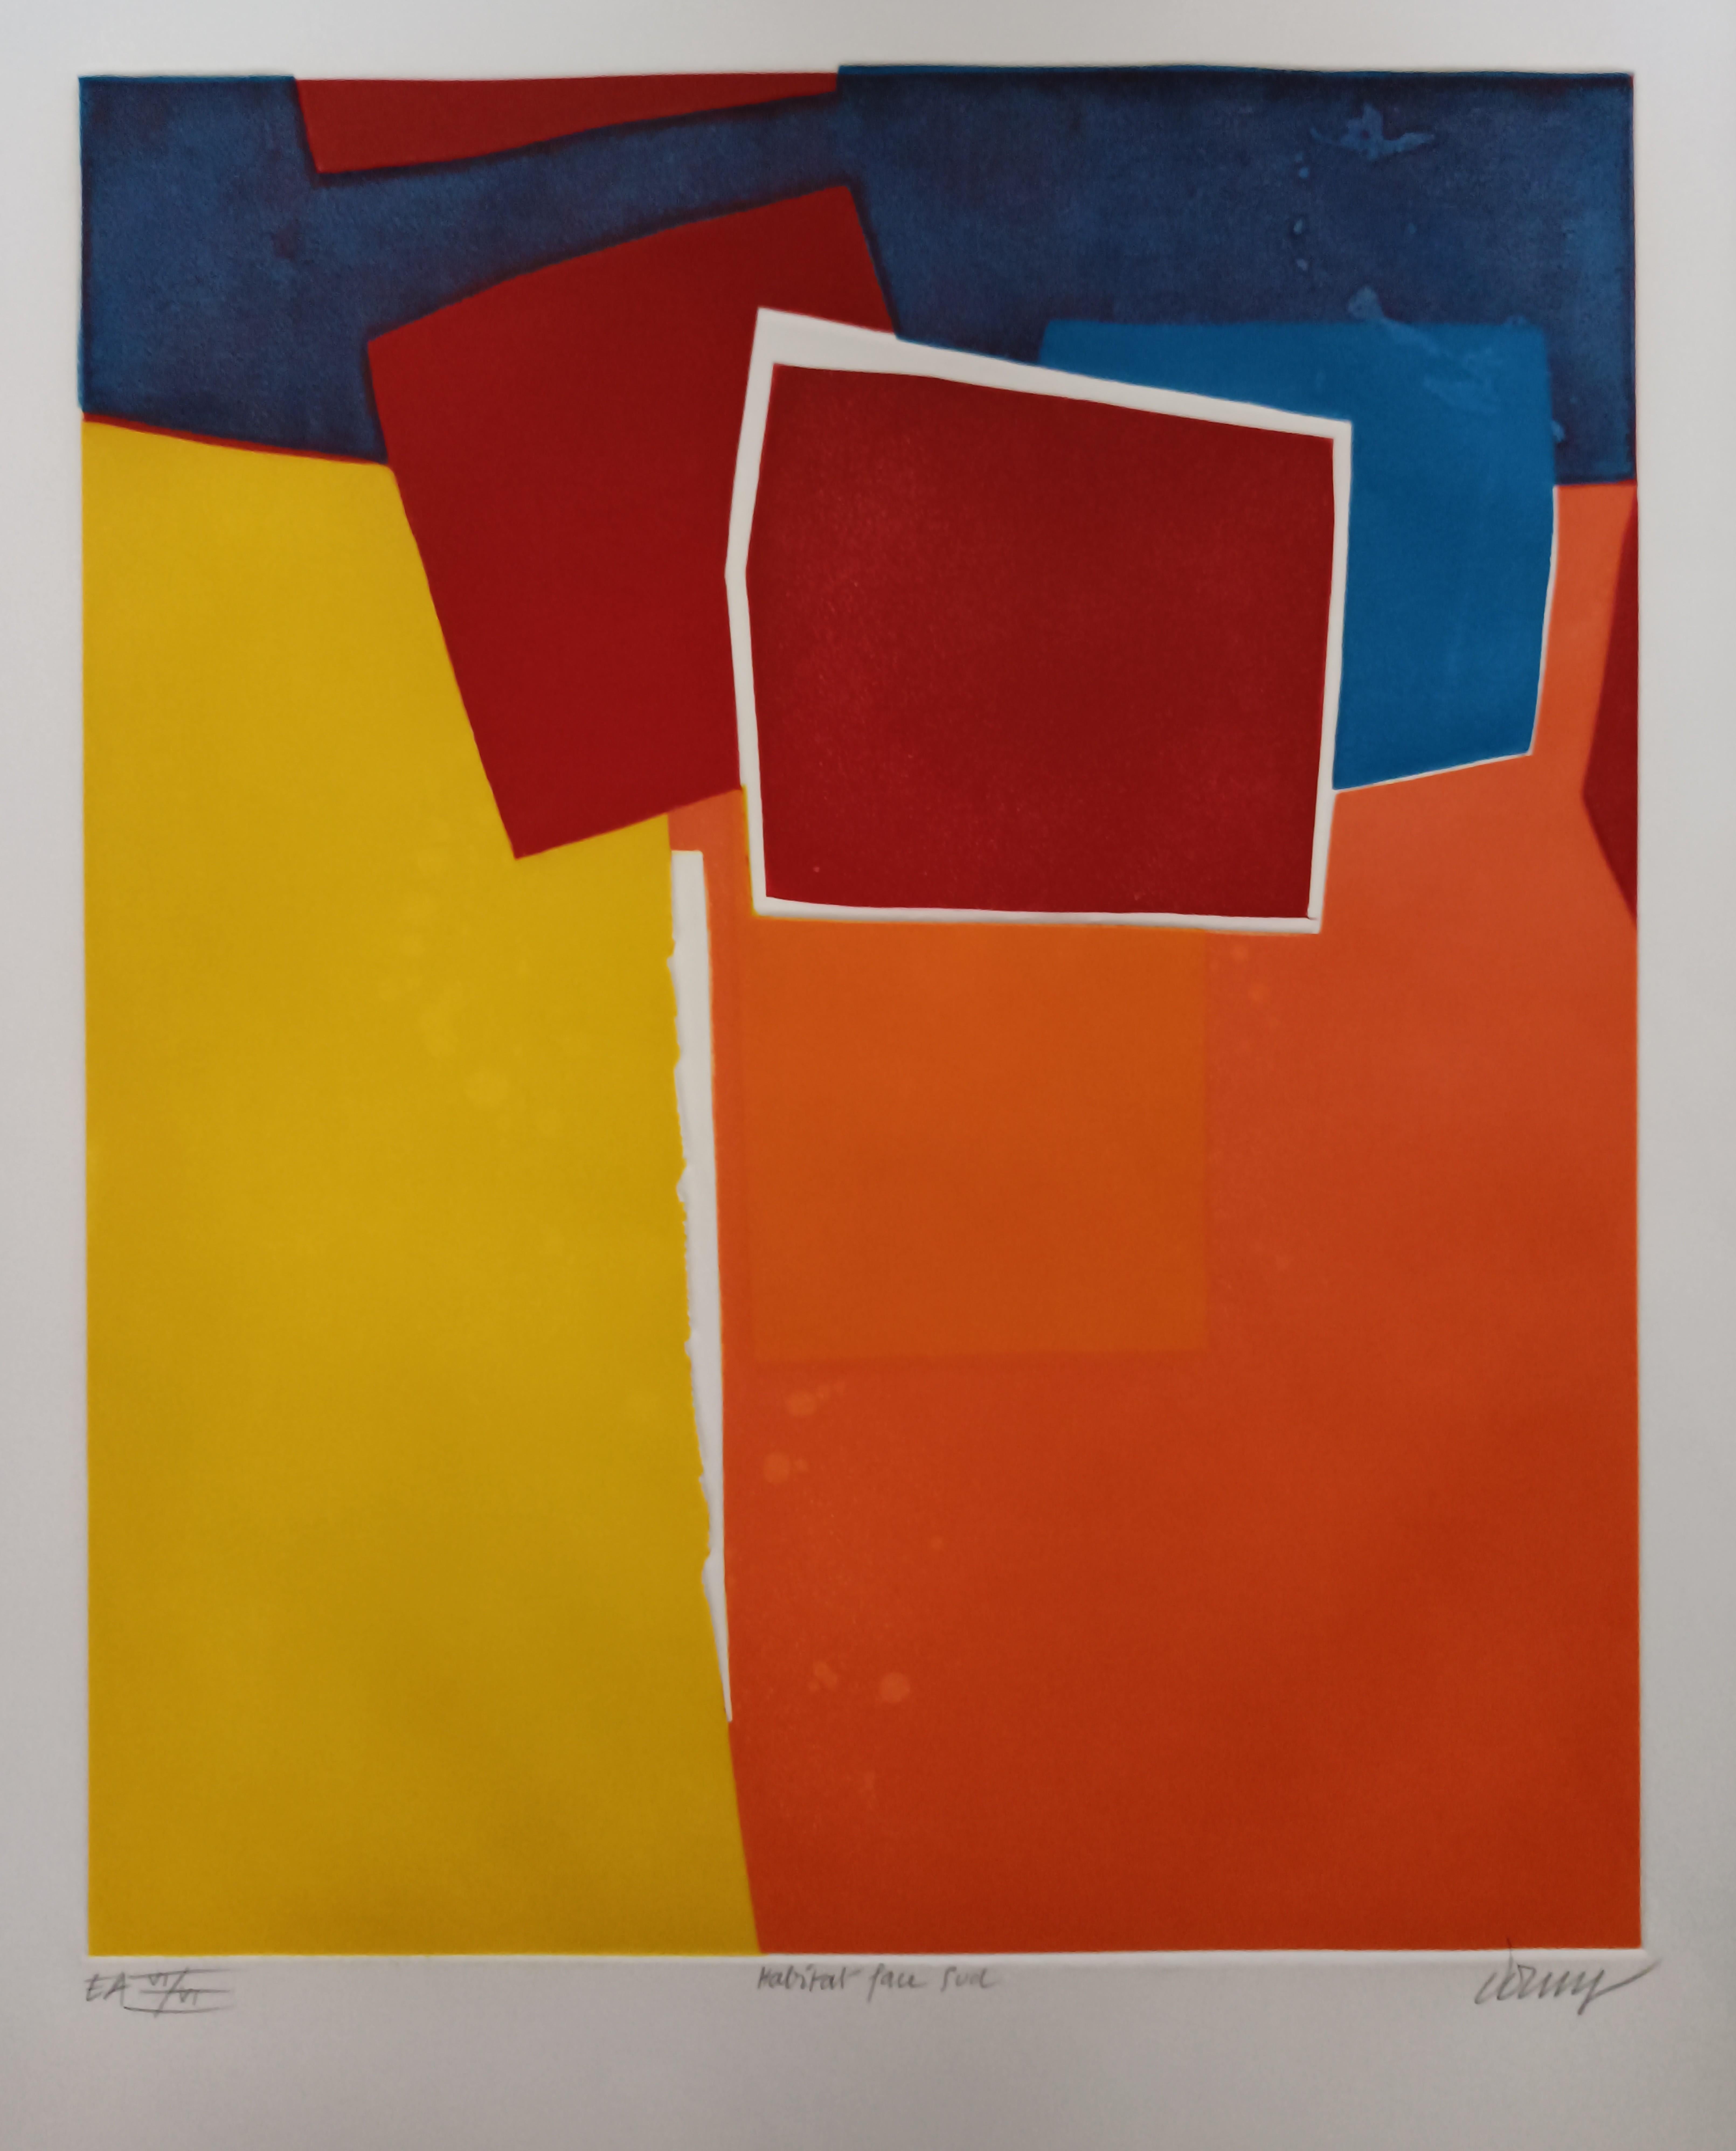 Bertrand Dorny Abstract Print - Habitat Face Sud, 1972